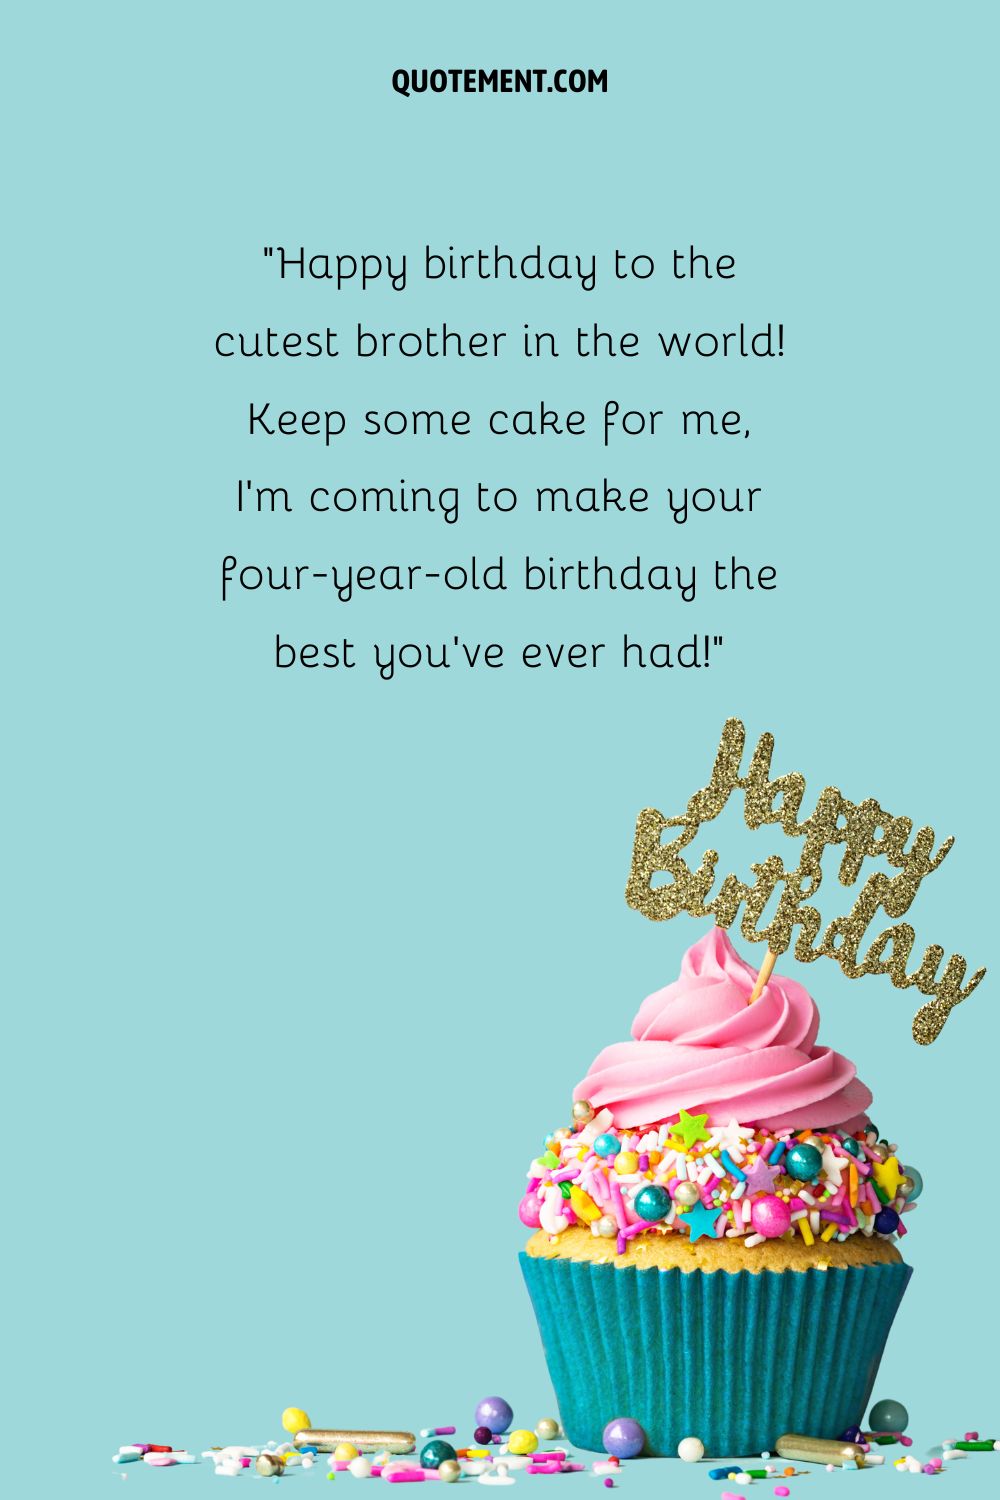 cupcake with rainbow sprinkles representing 4th birthday caption